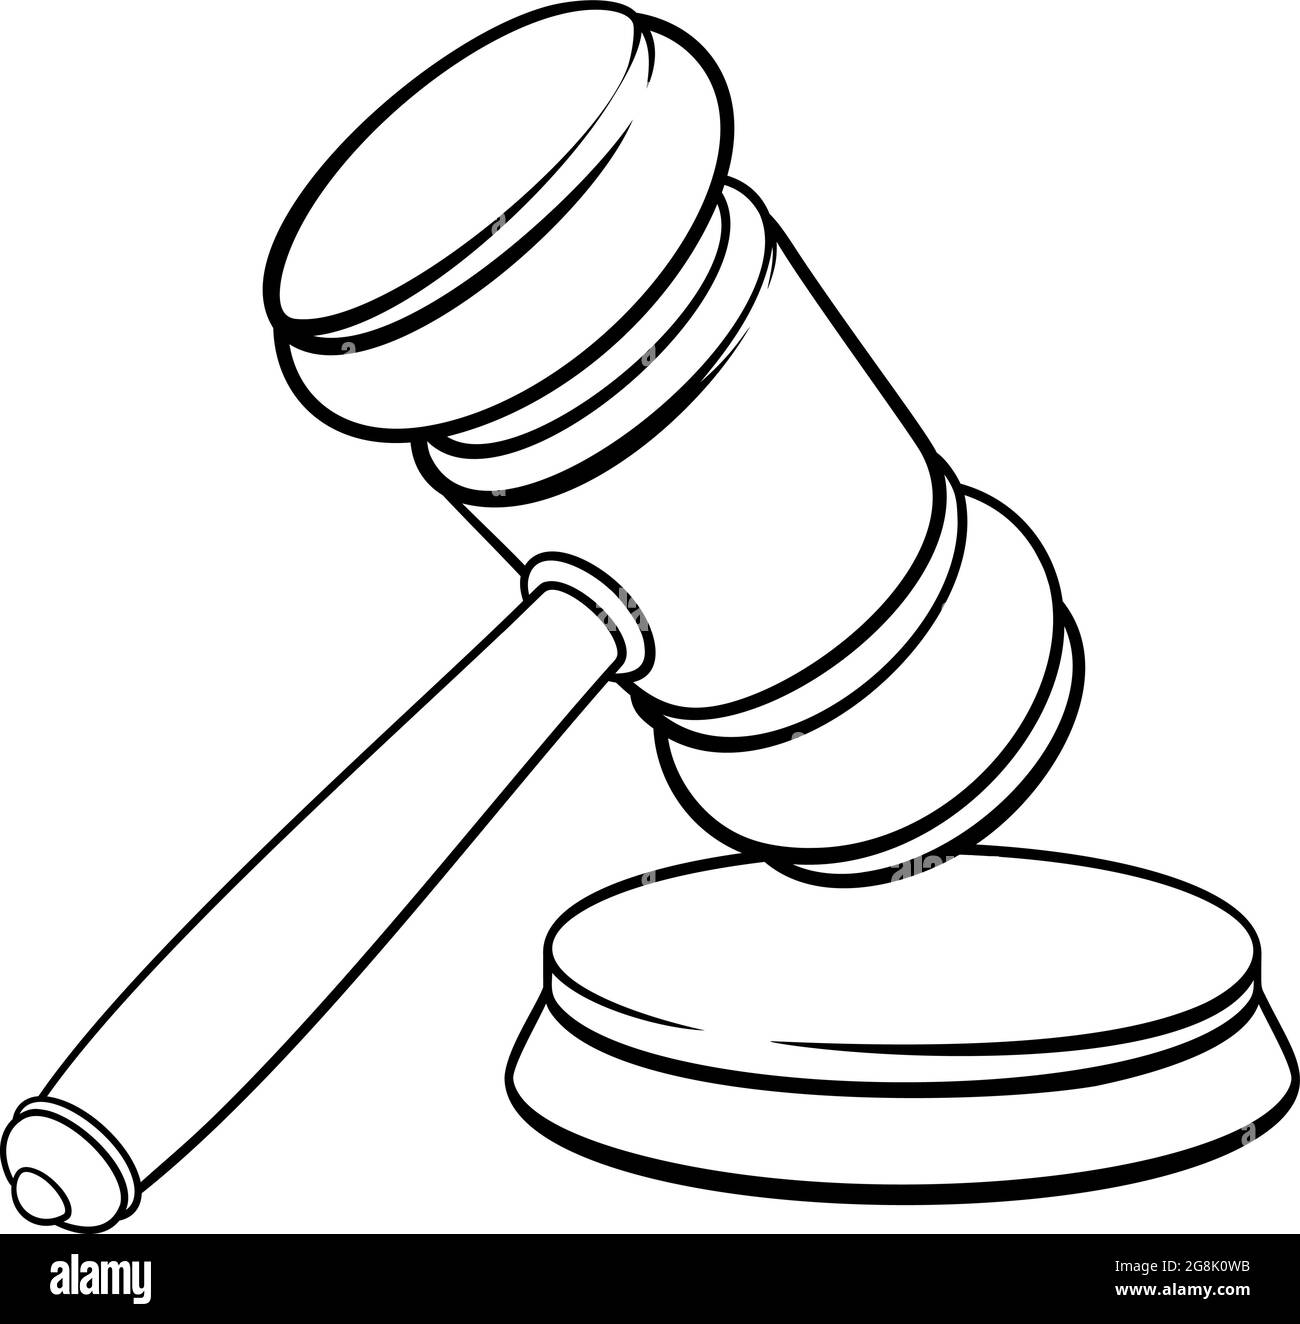 Judge Hammer Wooden Gavel and Base Cartoon Stock Vector Image & Art - Alamy